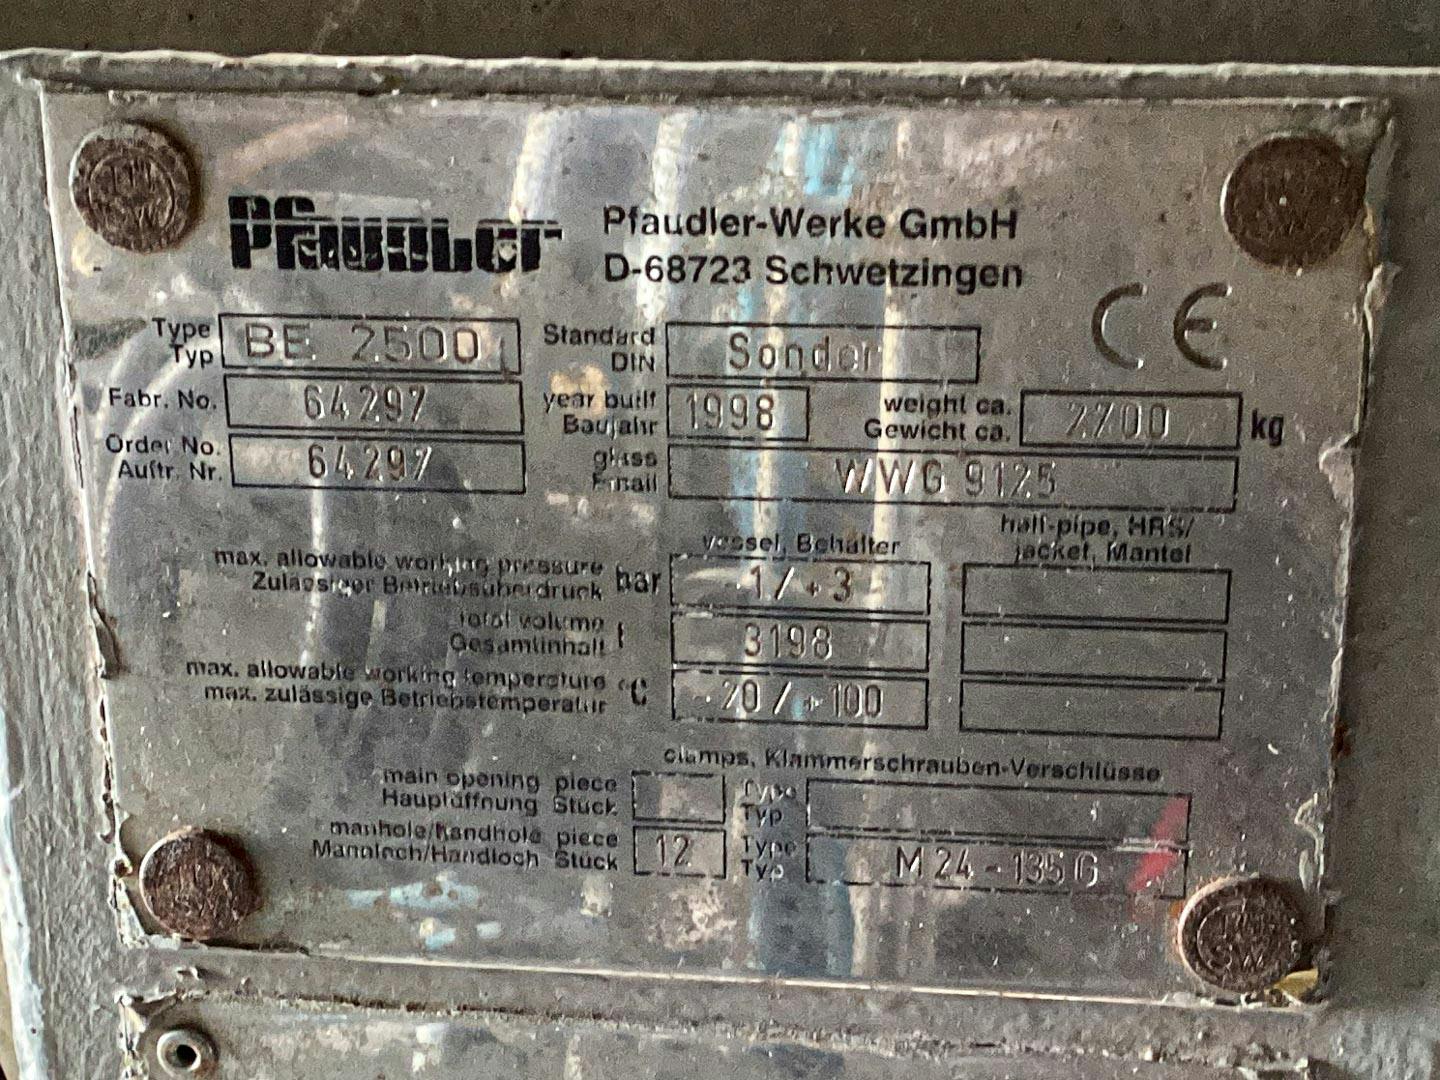 Pfaudler-werke BE2500 - Tanque mezclador - image 10